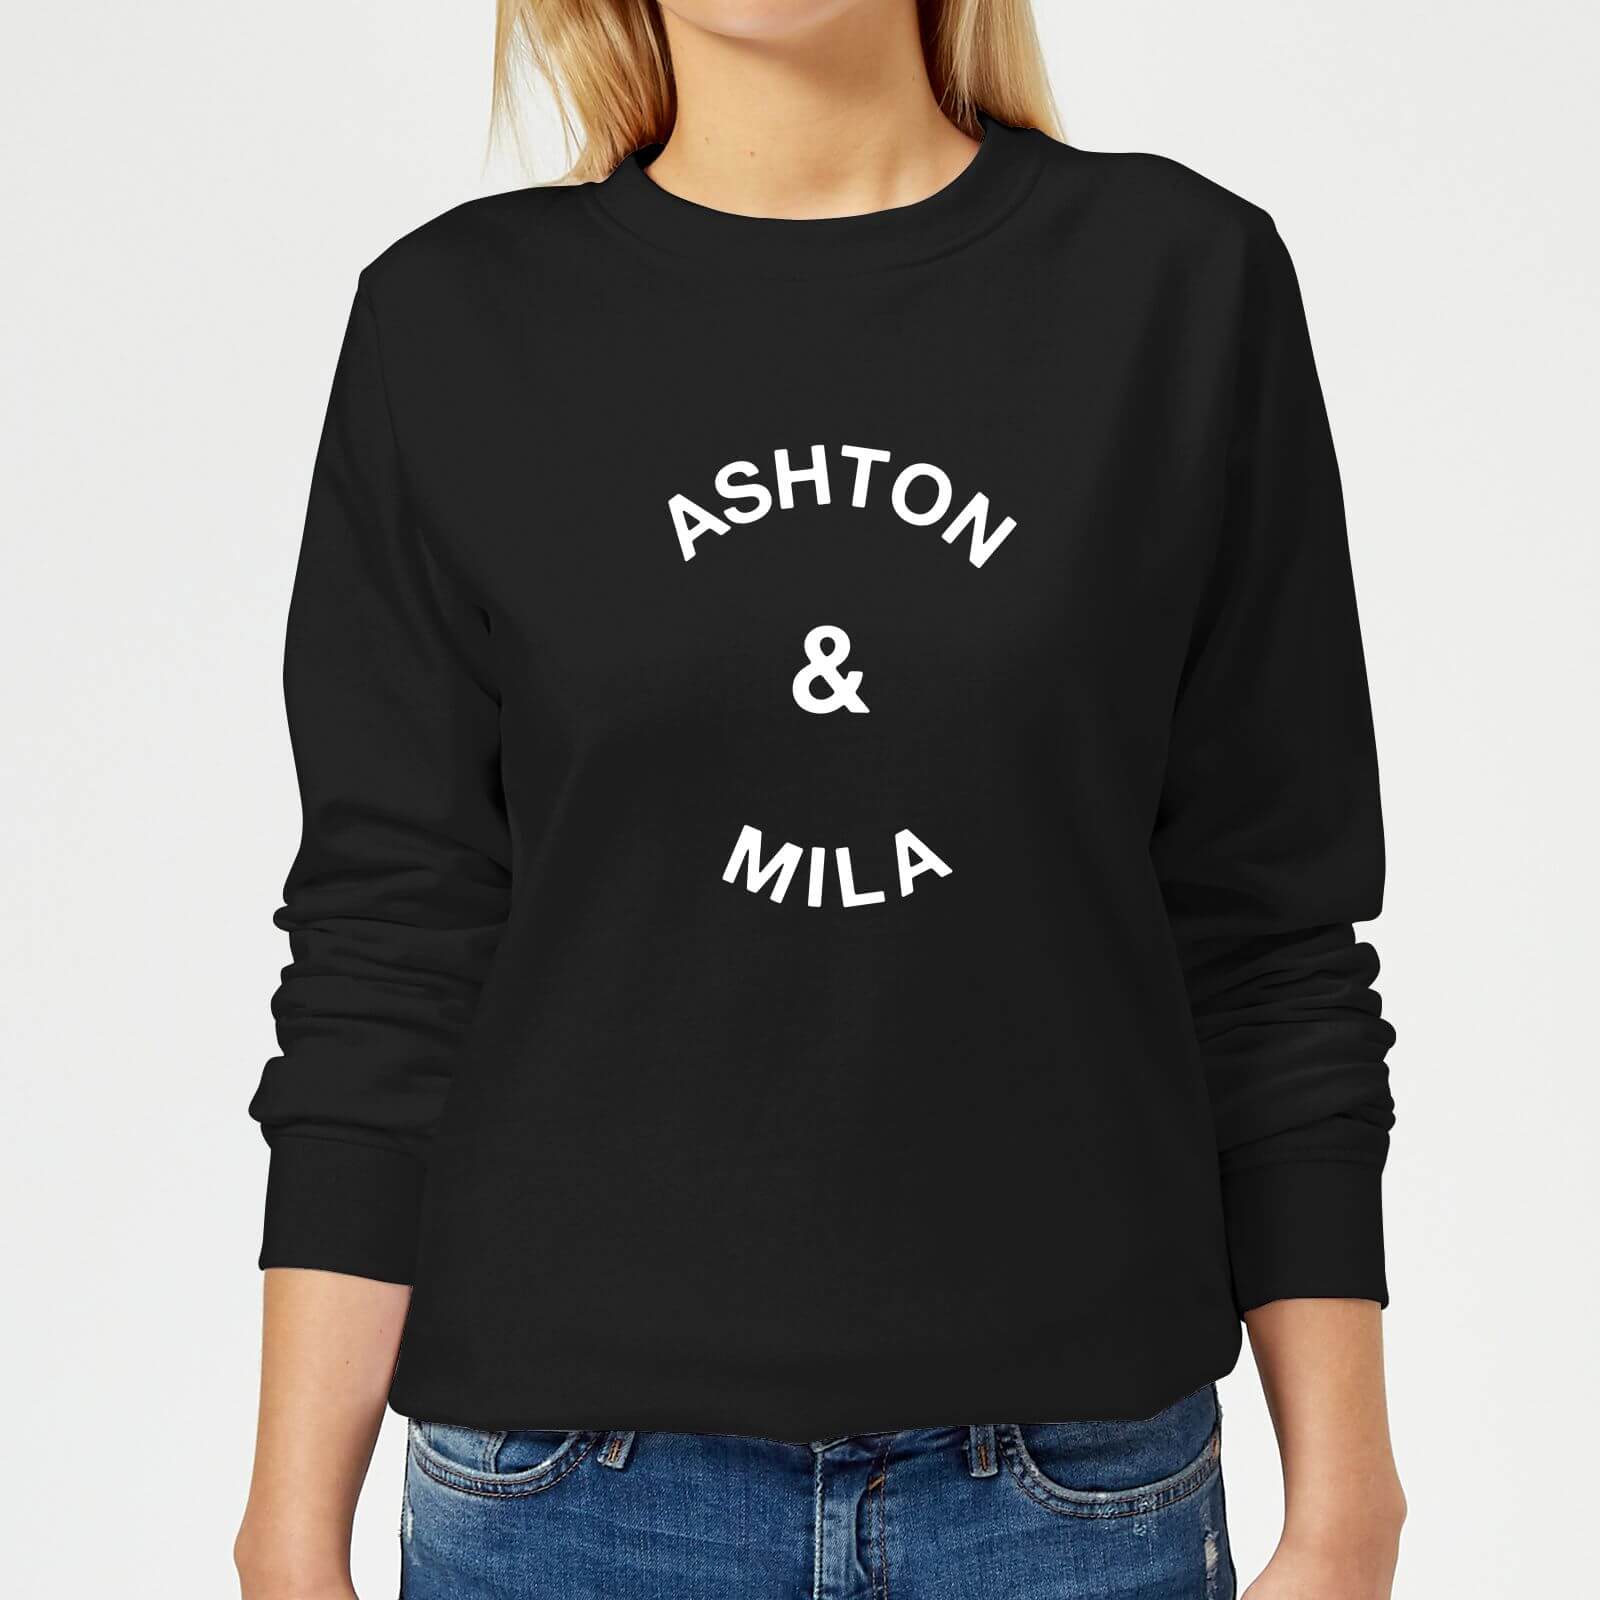 Ashton & Mila Women's Sweatshirt - Black - 5XL - Black